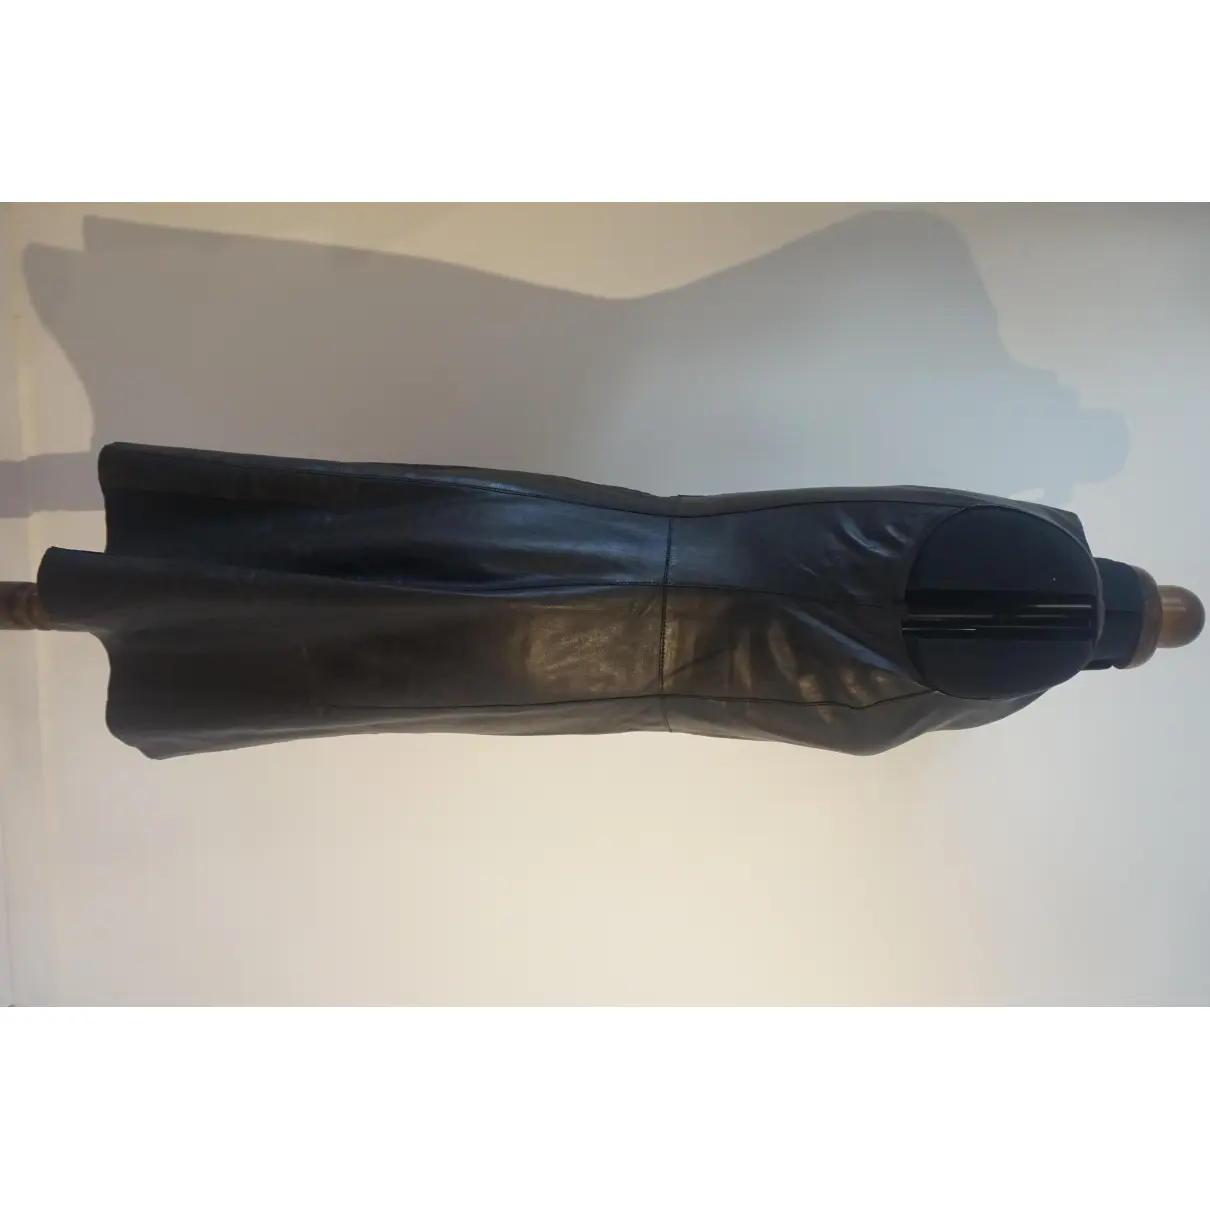 Leather mid-length dress CAROLL